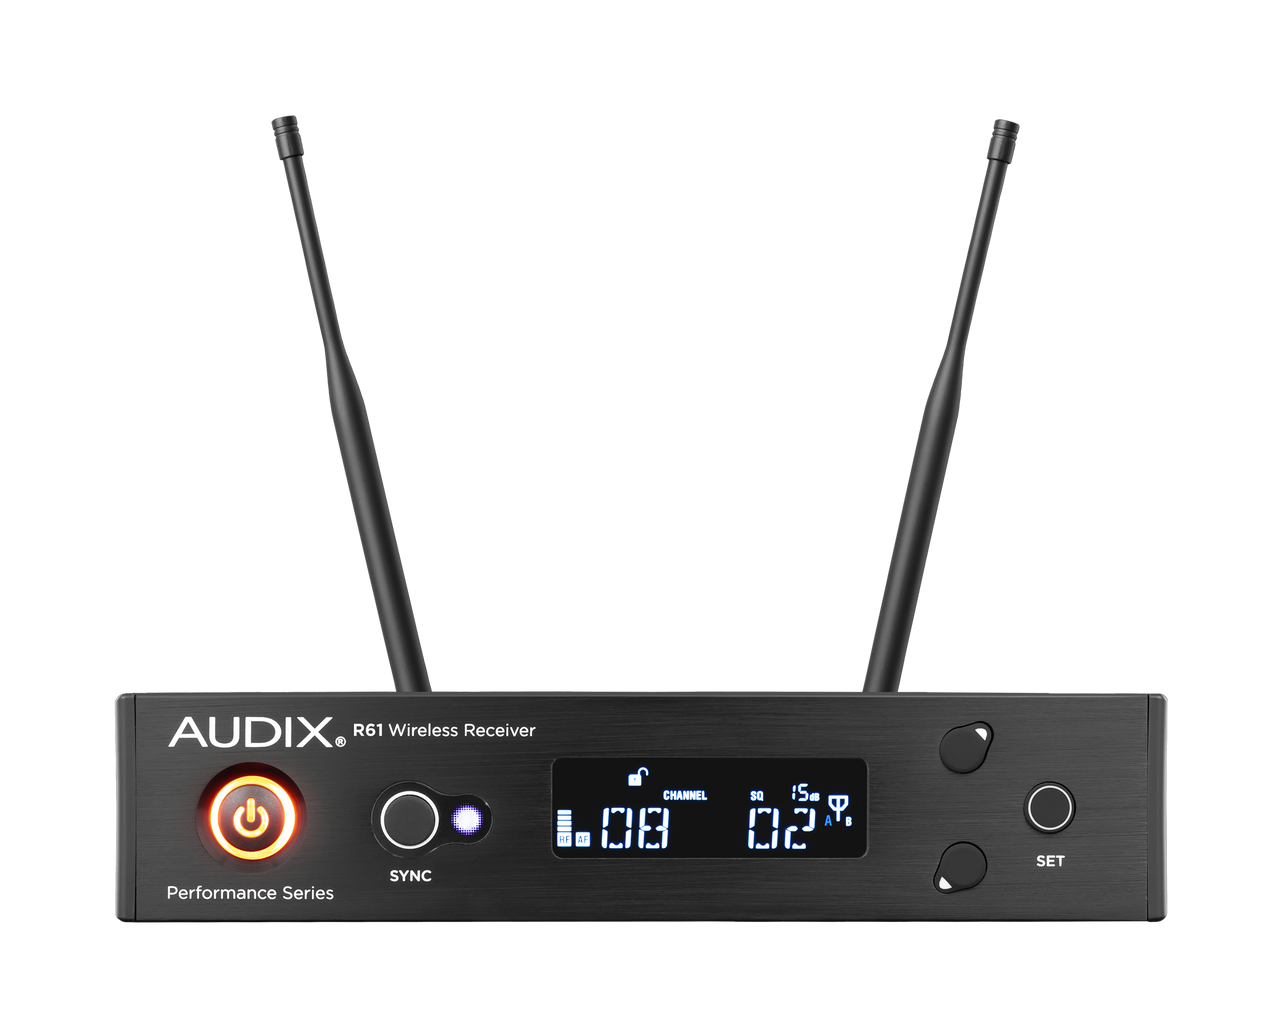 Audix AP61SAX Wireless Microphone System R61 Receiver, B60 Bodypack, Adx20I Condenser Microphone